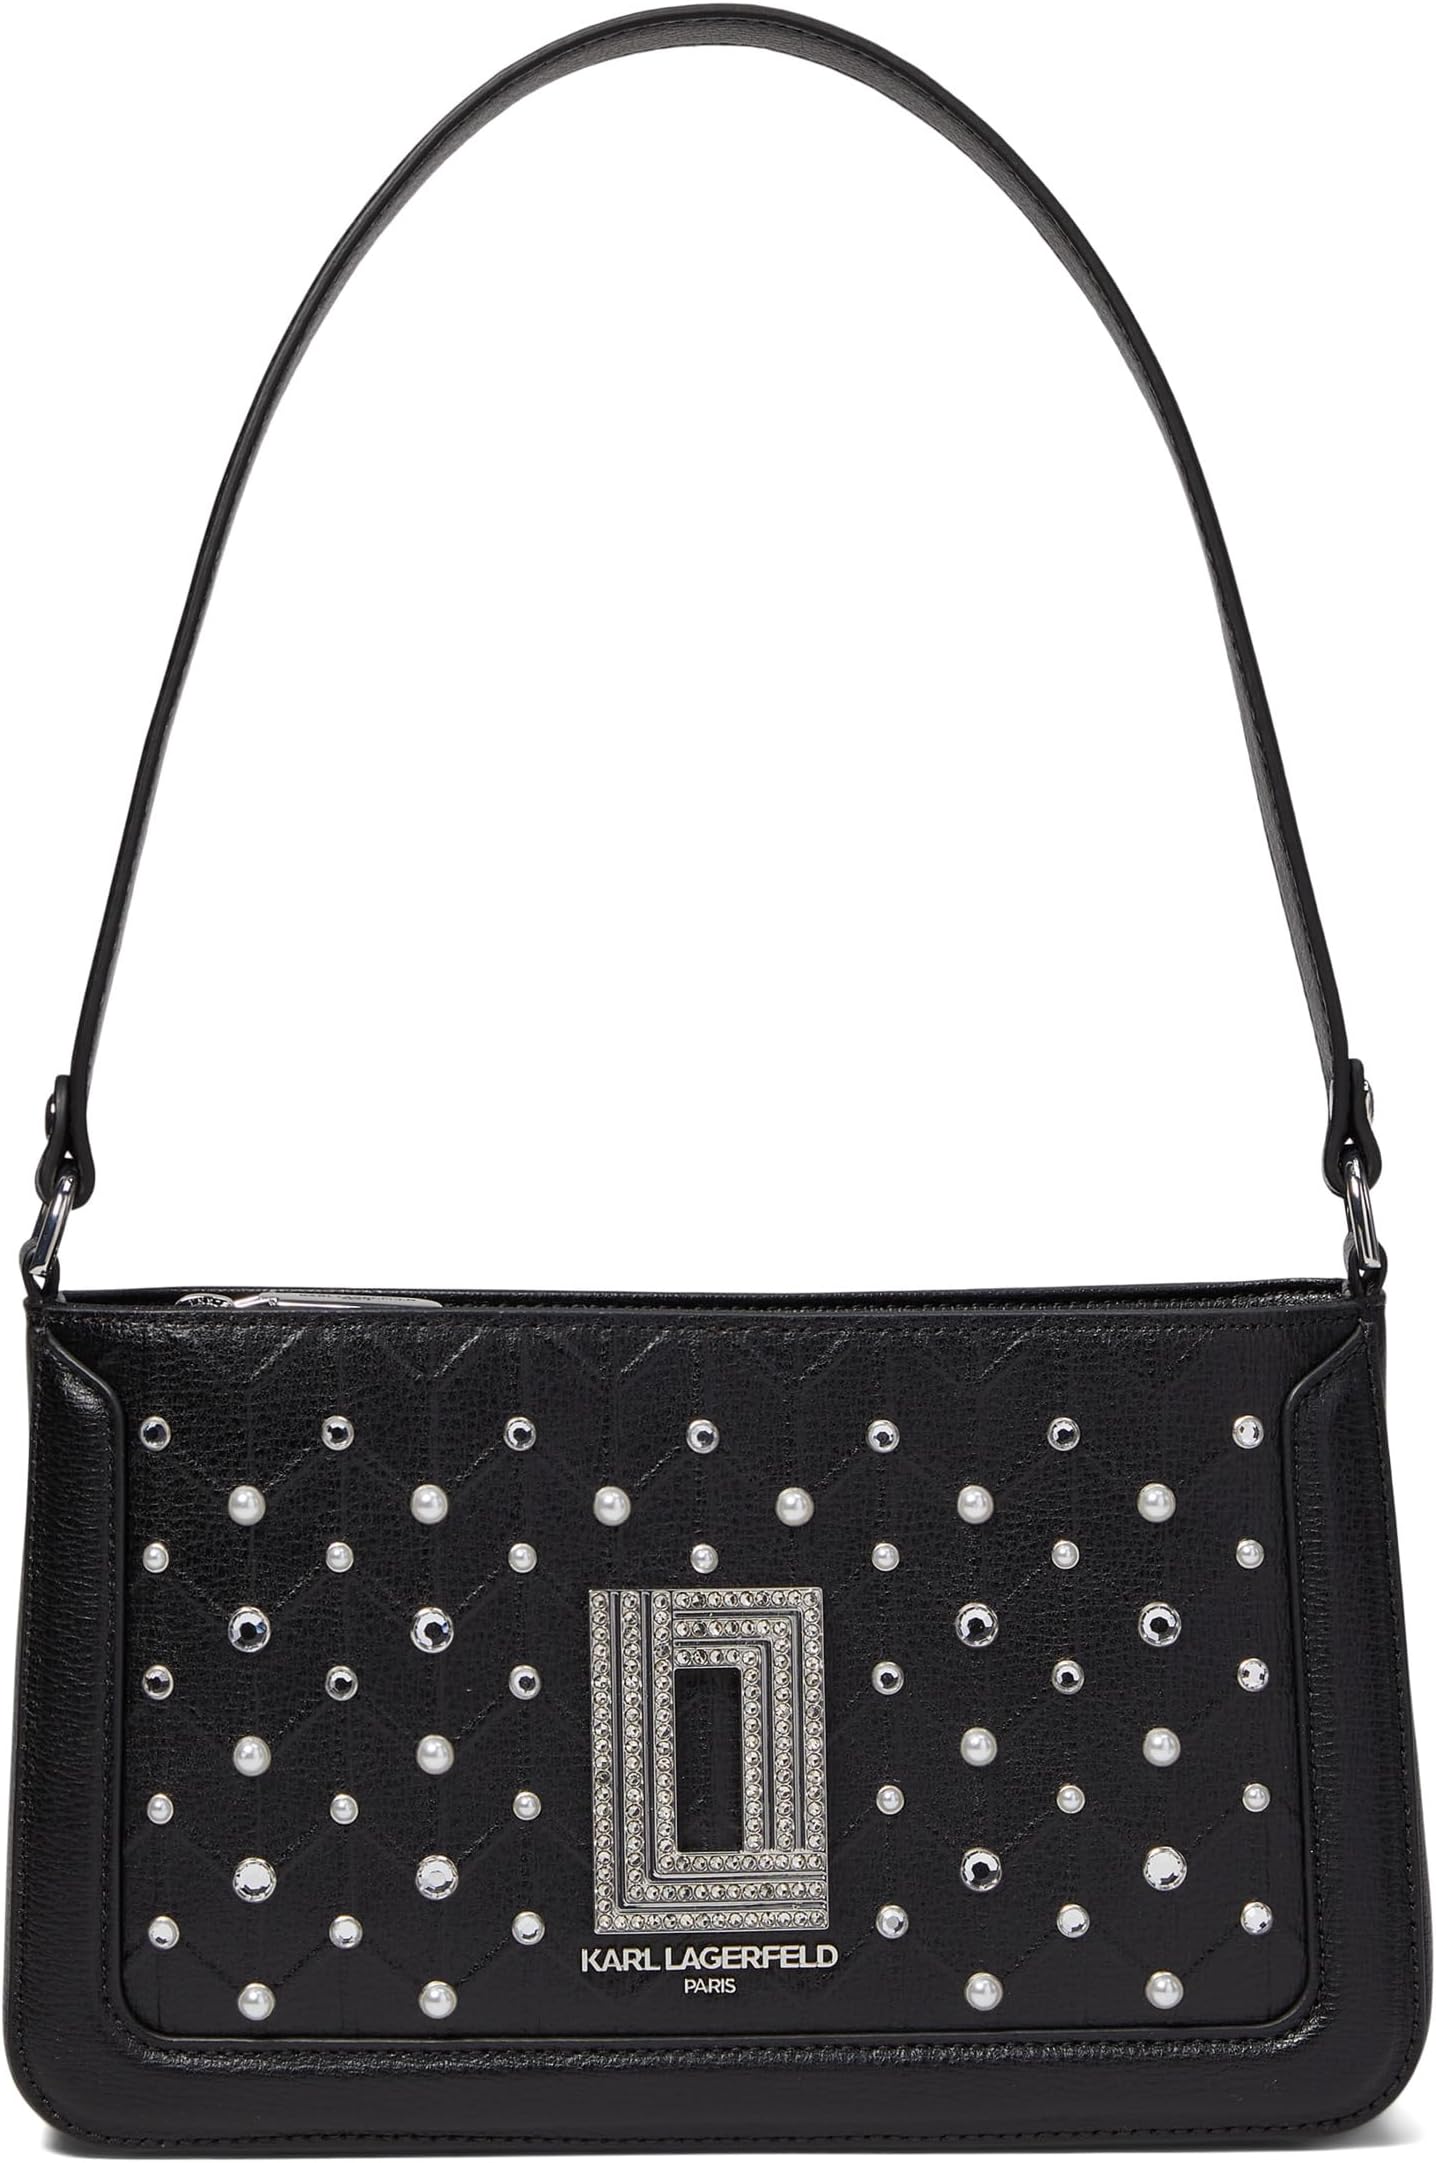 Сумка Simone Demi Karl Lagerfeld Paris, цвет Black/Crystal сумка simone с тиснением под крокодила karl lagerfeld paris цвет black logo